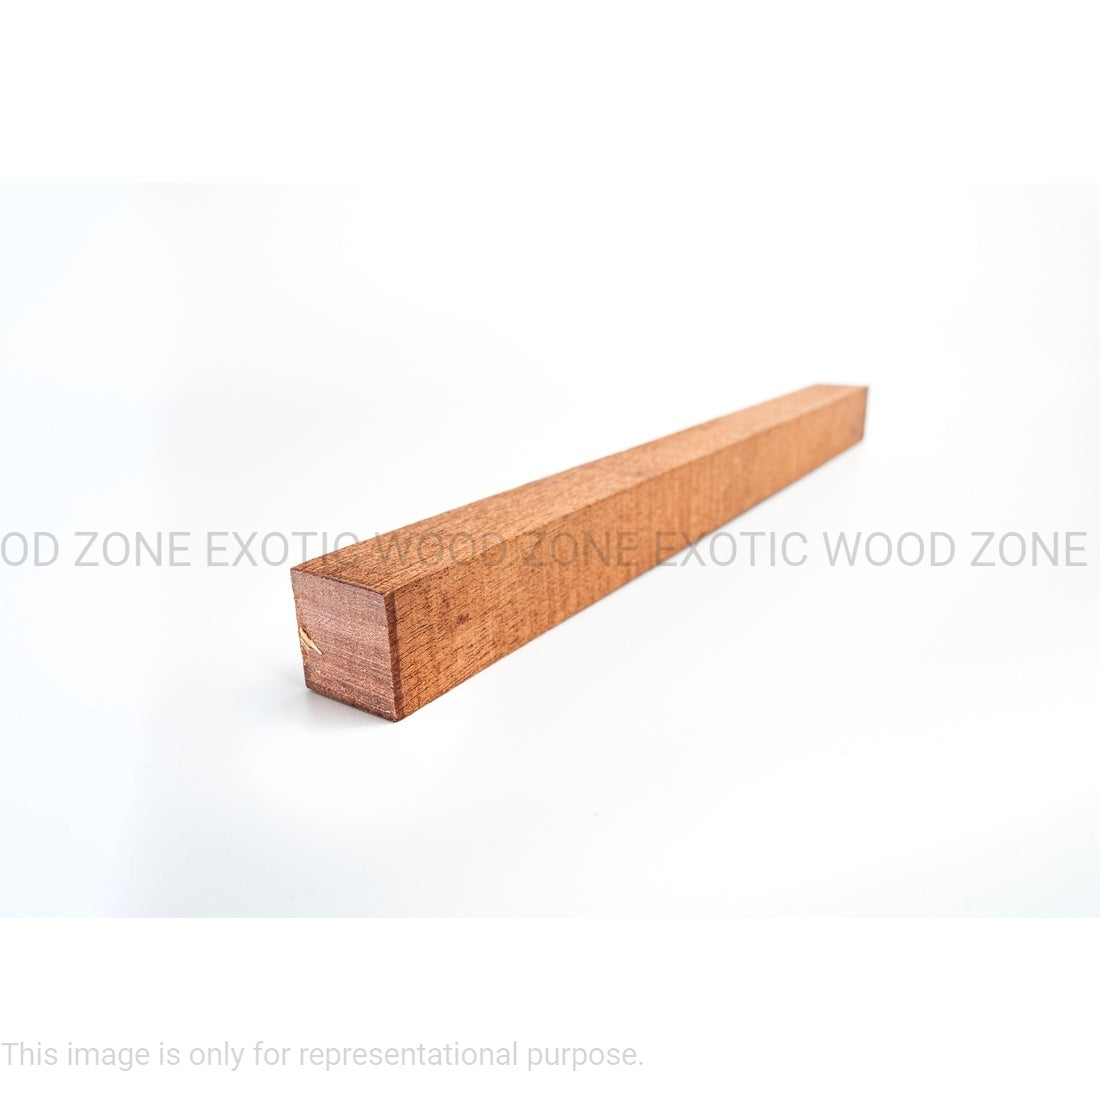 Honduran Mahogany Hobby Wood/ Turning Wood Blanks 1 x 1 x 12 inches - Exotic Wood Zone - Buy online Across USA 